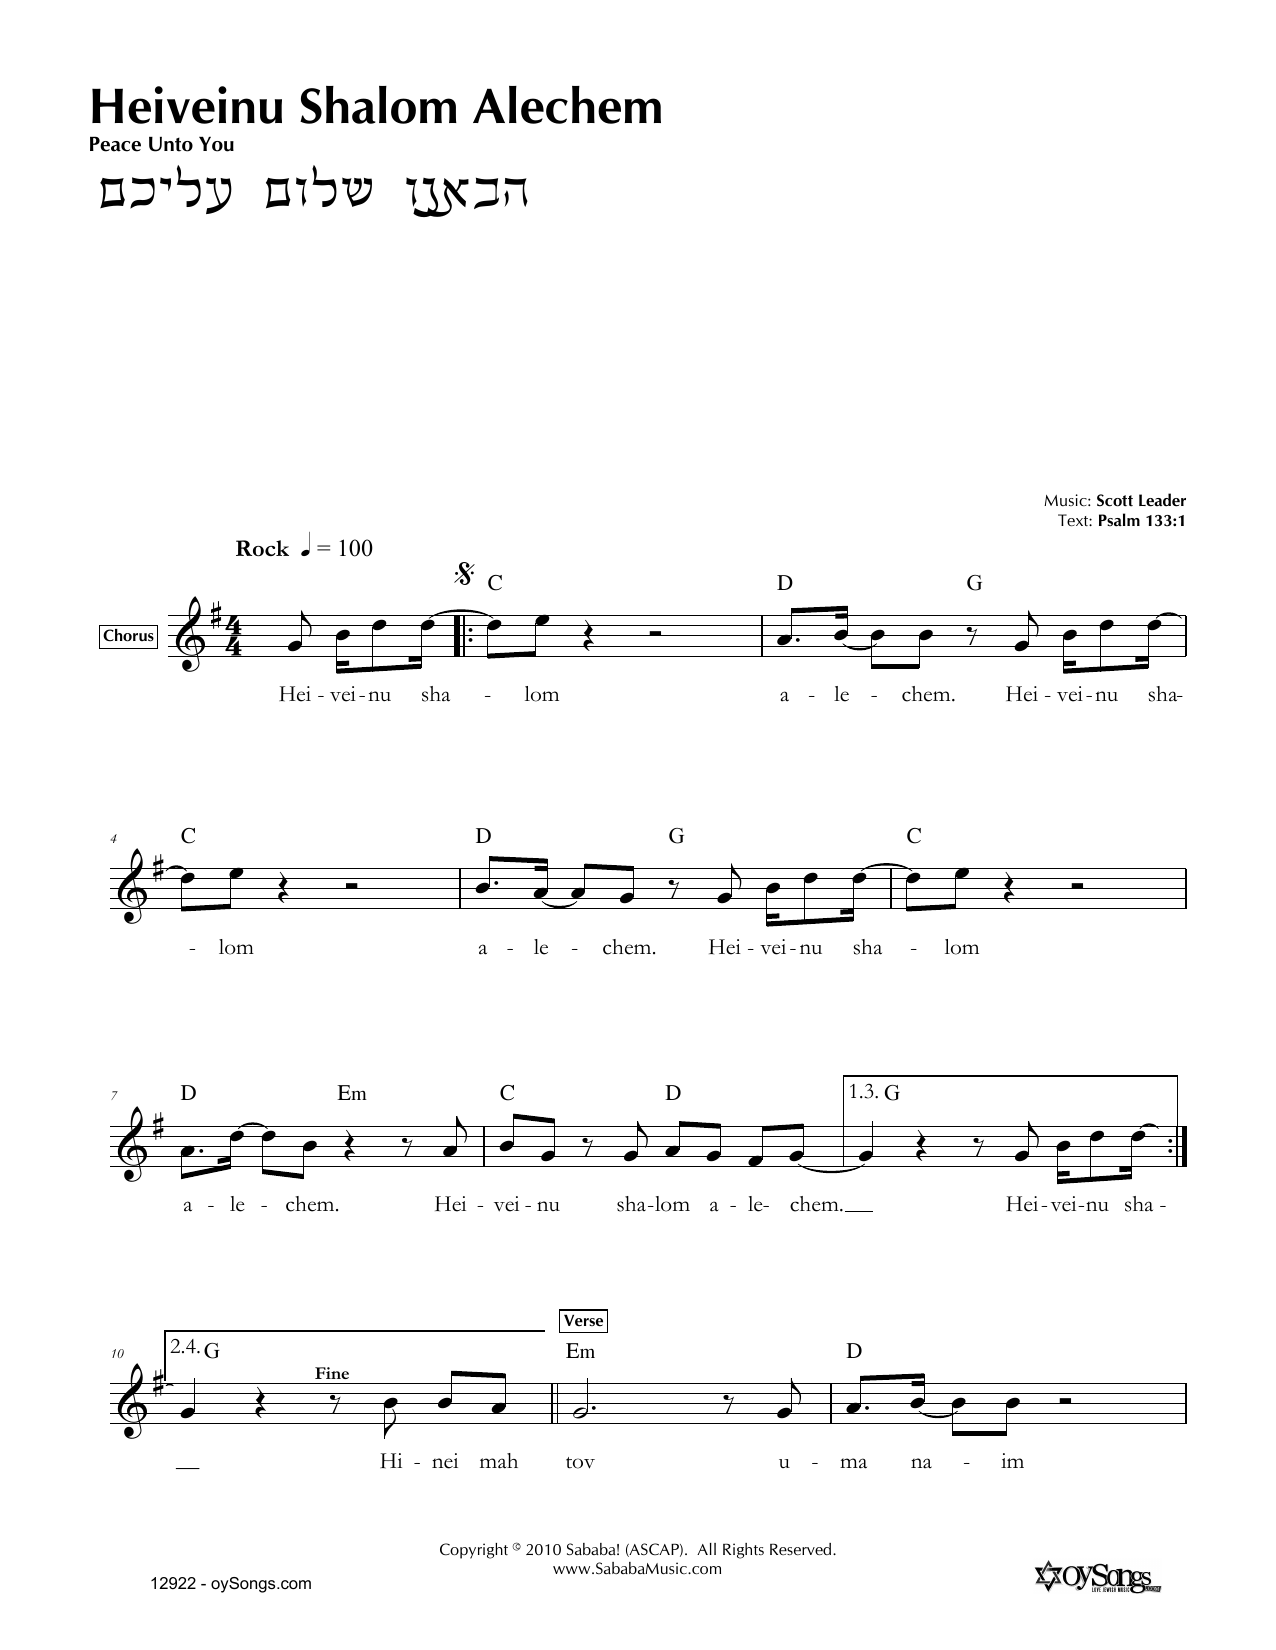 Scott Leader Heiveinu Shalom Alechem sheet music notes and chords arranged for Lead Sheet / Fake Book